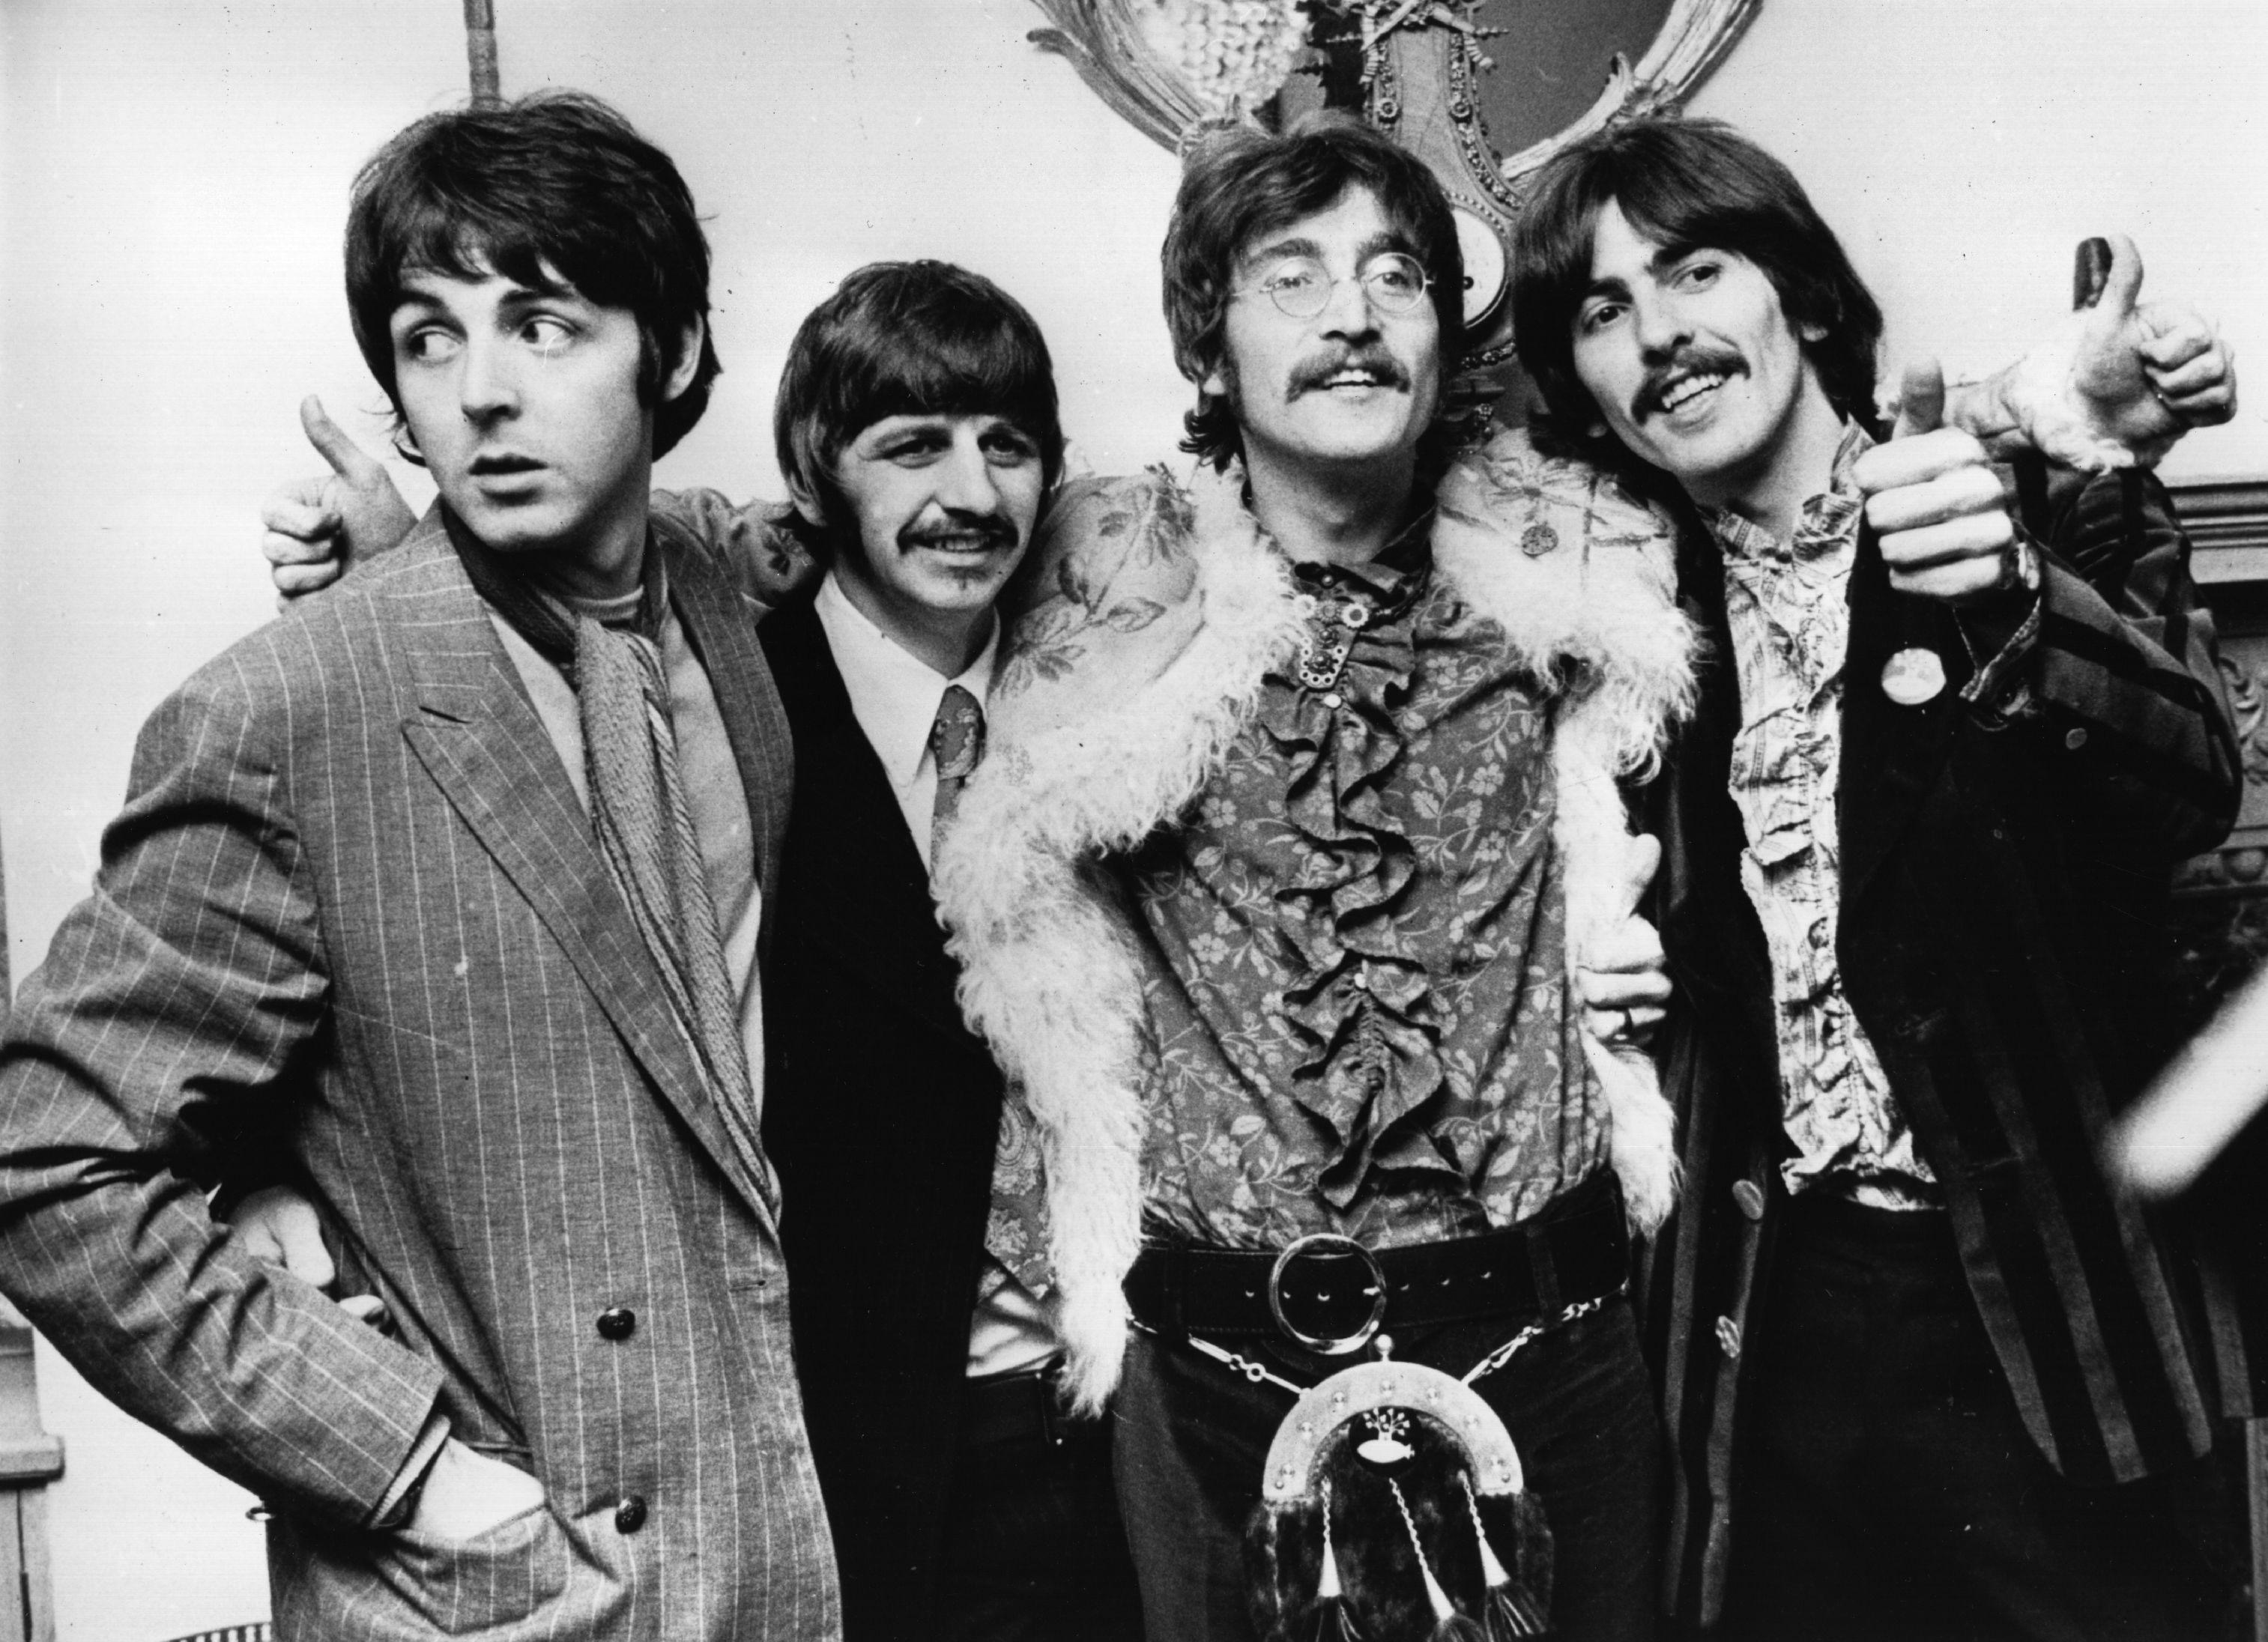 The Beatles’ Paul McCartney, Ringo Starr, John Lennon, and George Harrison in a row